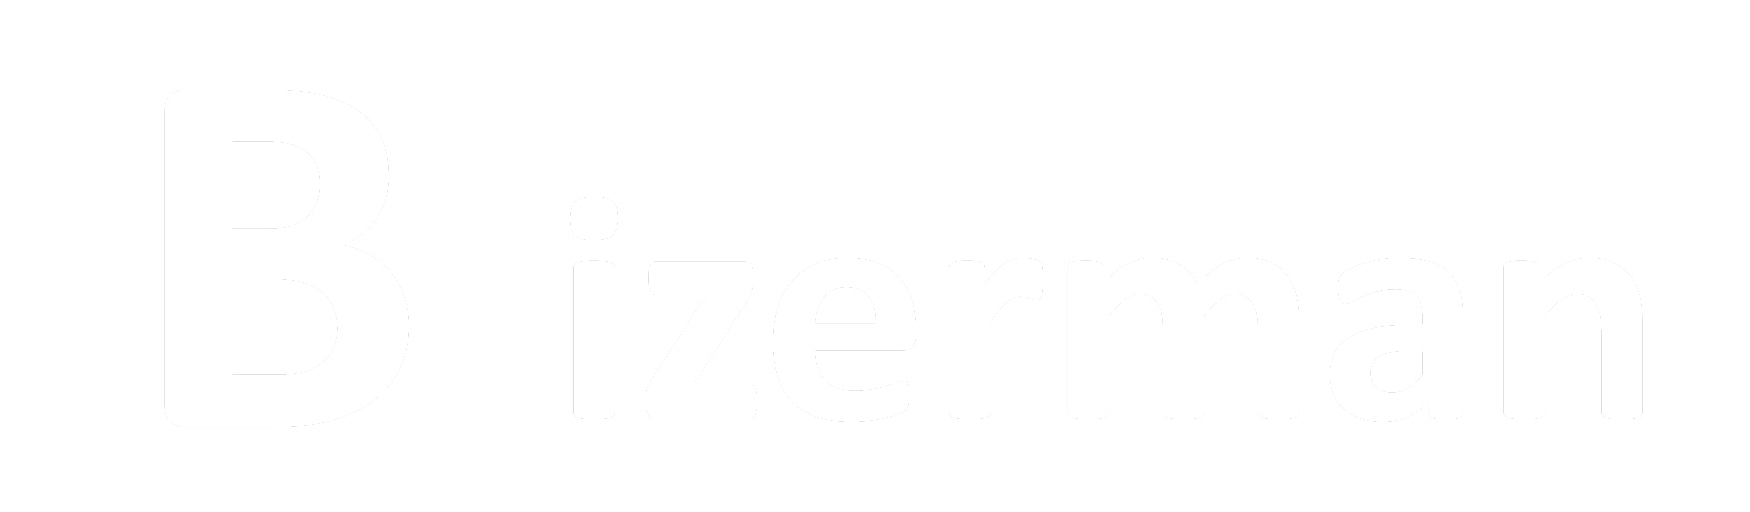 Bizeman Logo - Open Source Software solution Provider